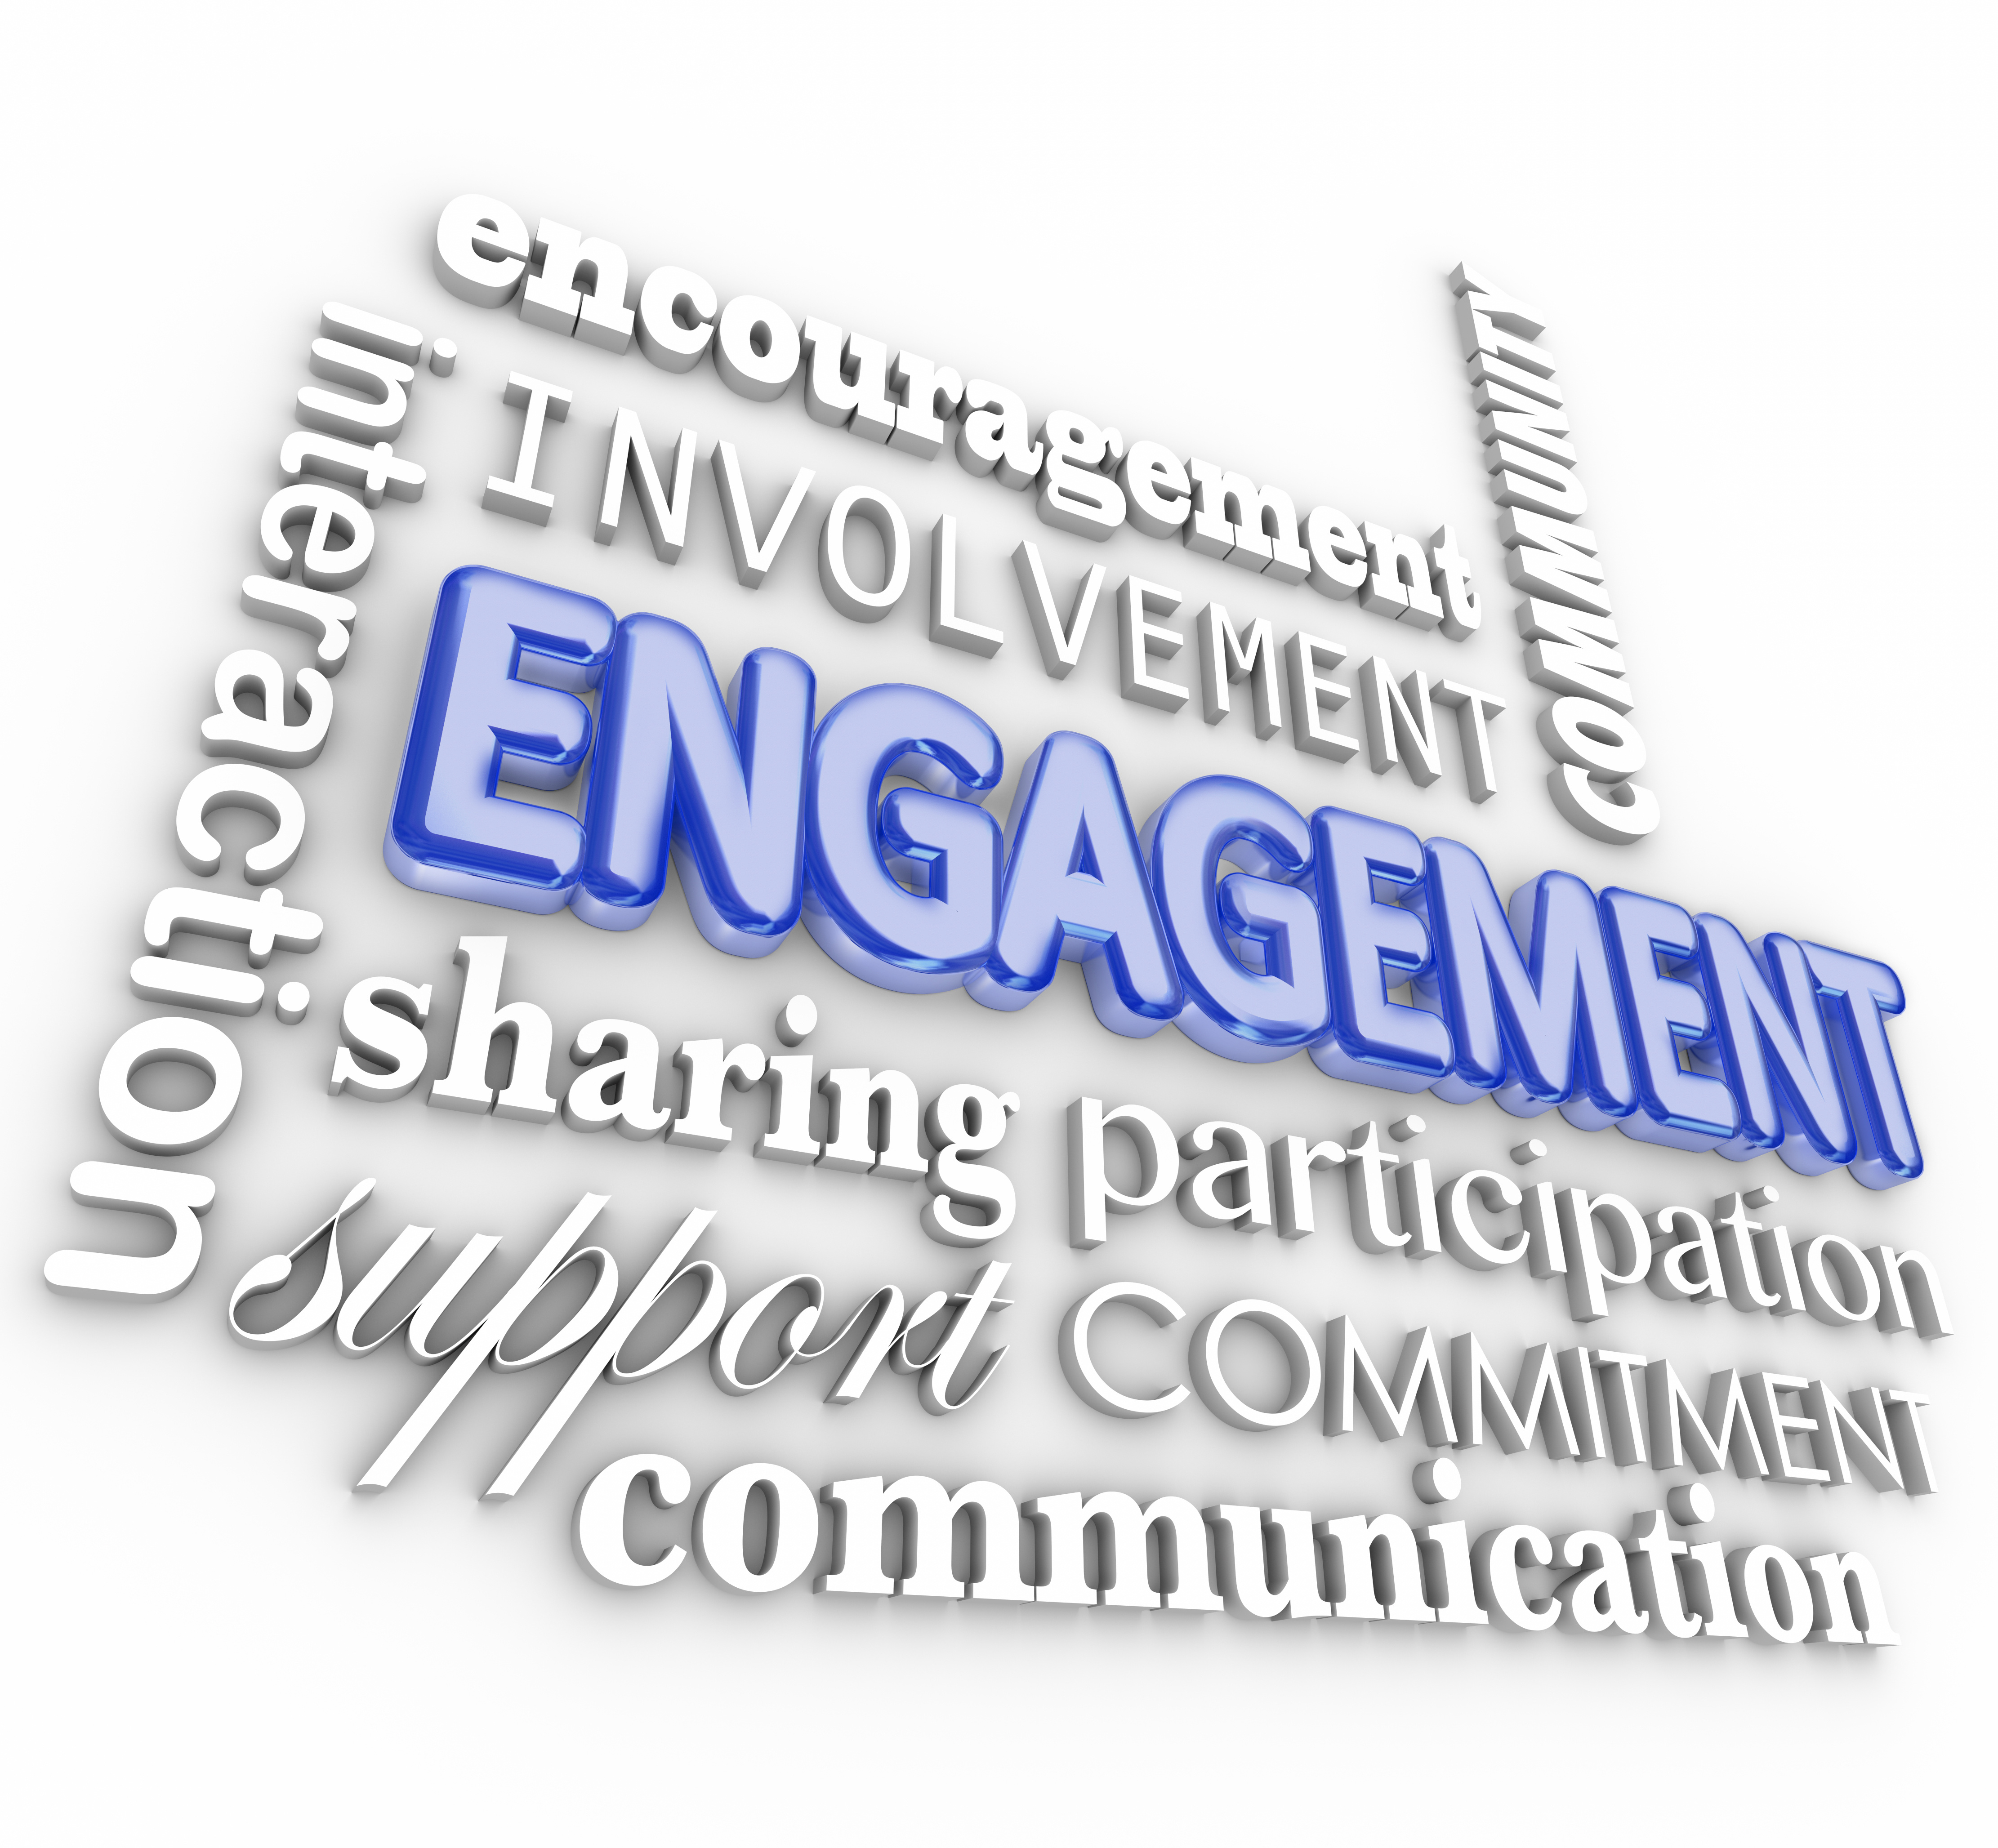 wordcloud Engagement encouragement community interaction sharing participation support commitment communication